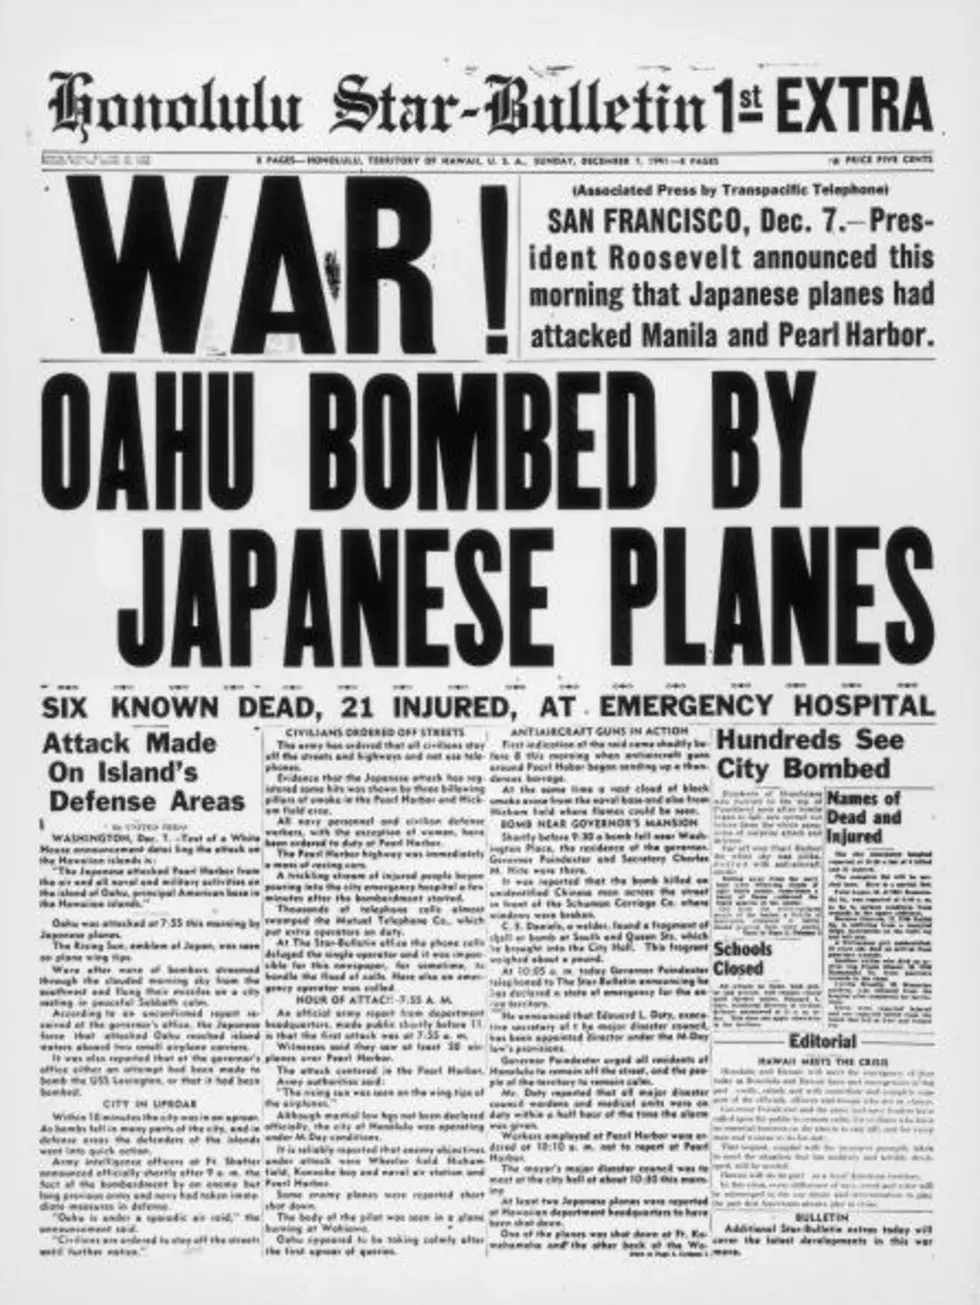 De-Classified 1941 Navy Memo Hints US Knew Hawaii Attack Was Coming